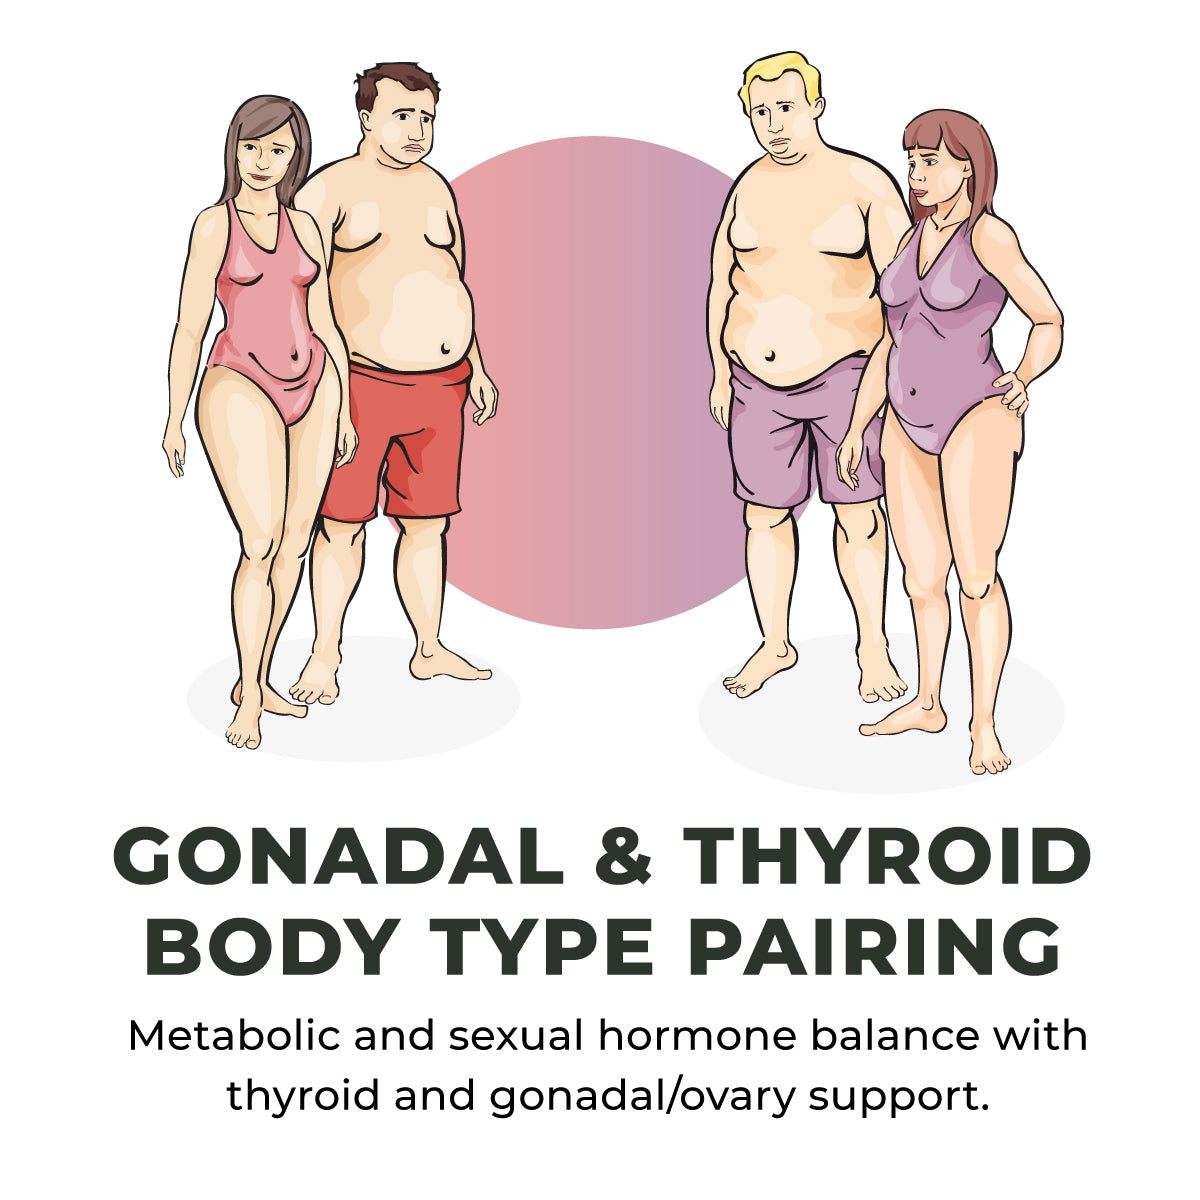 Mobile-Thyroid-and-Gonadal-Body-Type-Pairing.jpg__PID:360d21e3-4481-4a26-a1ce-033954ffbd6b